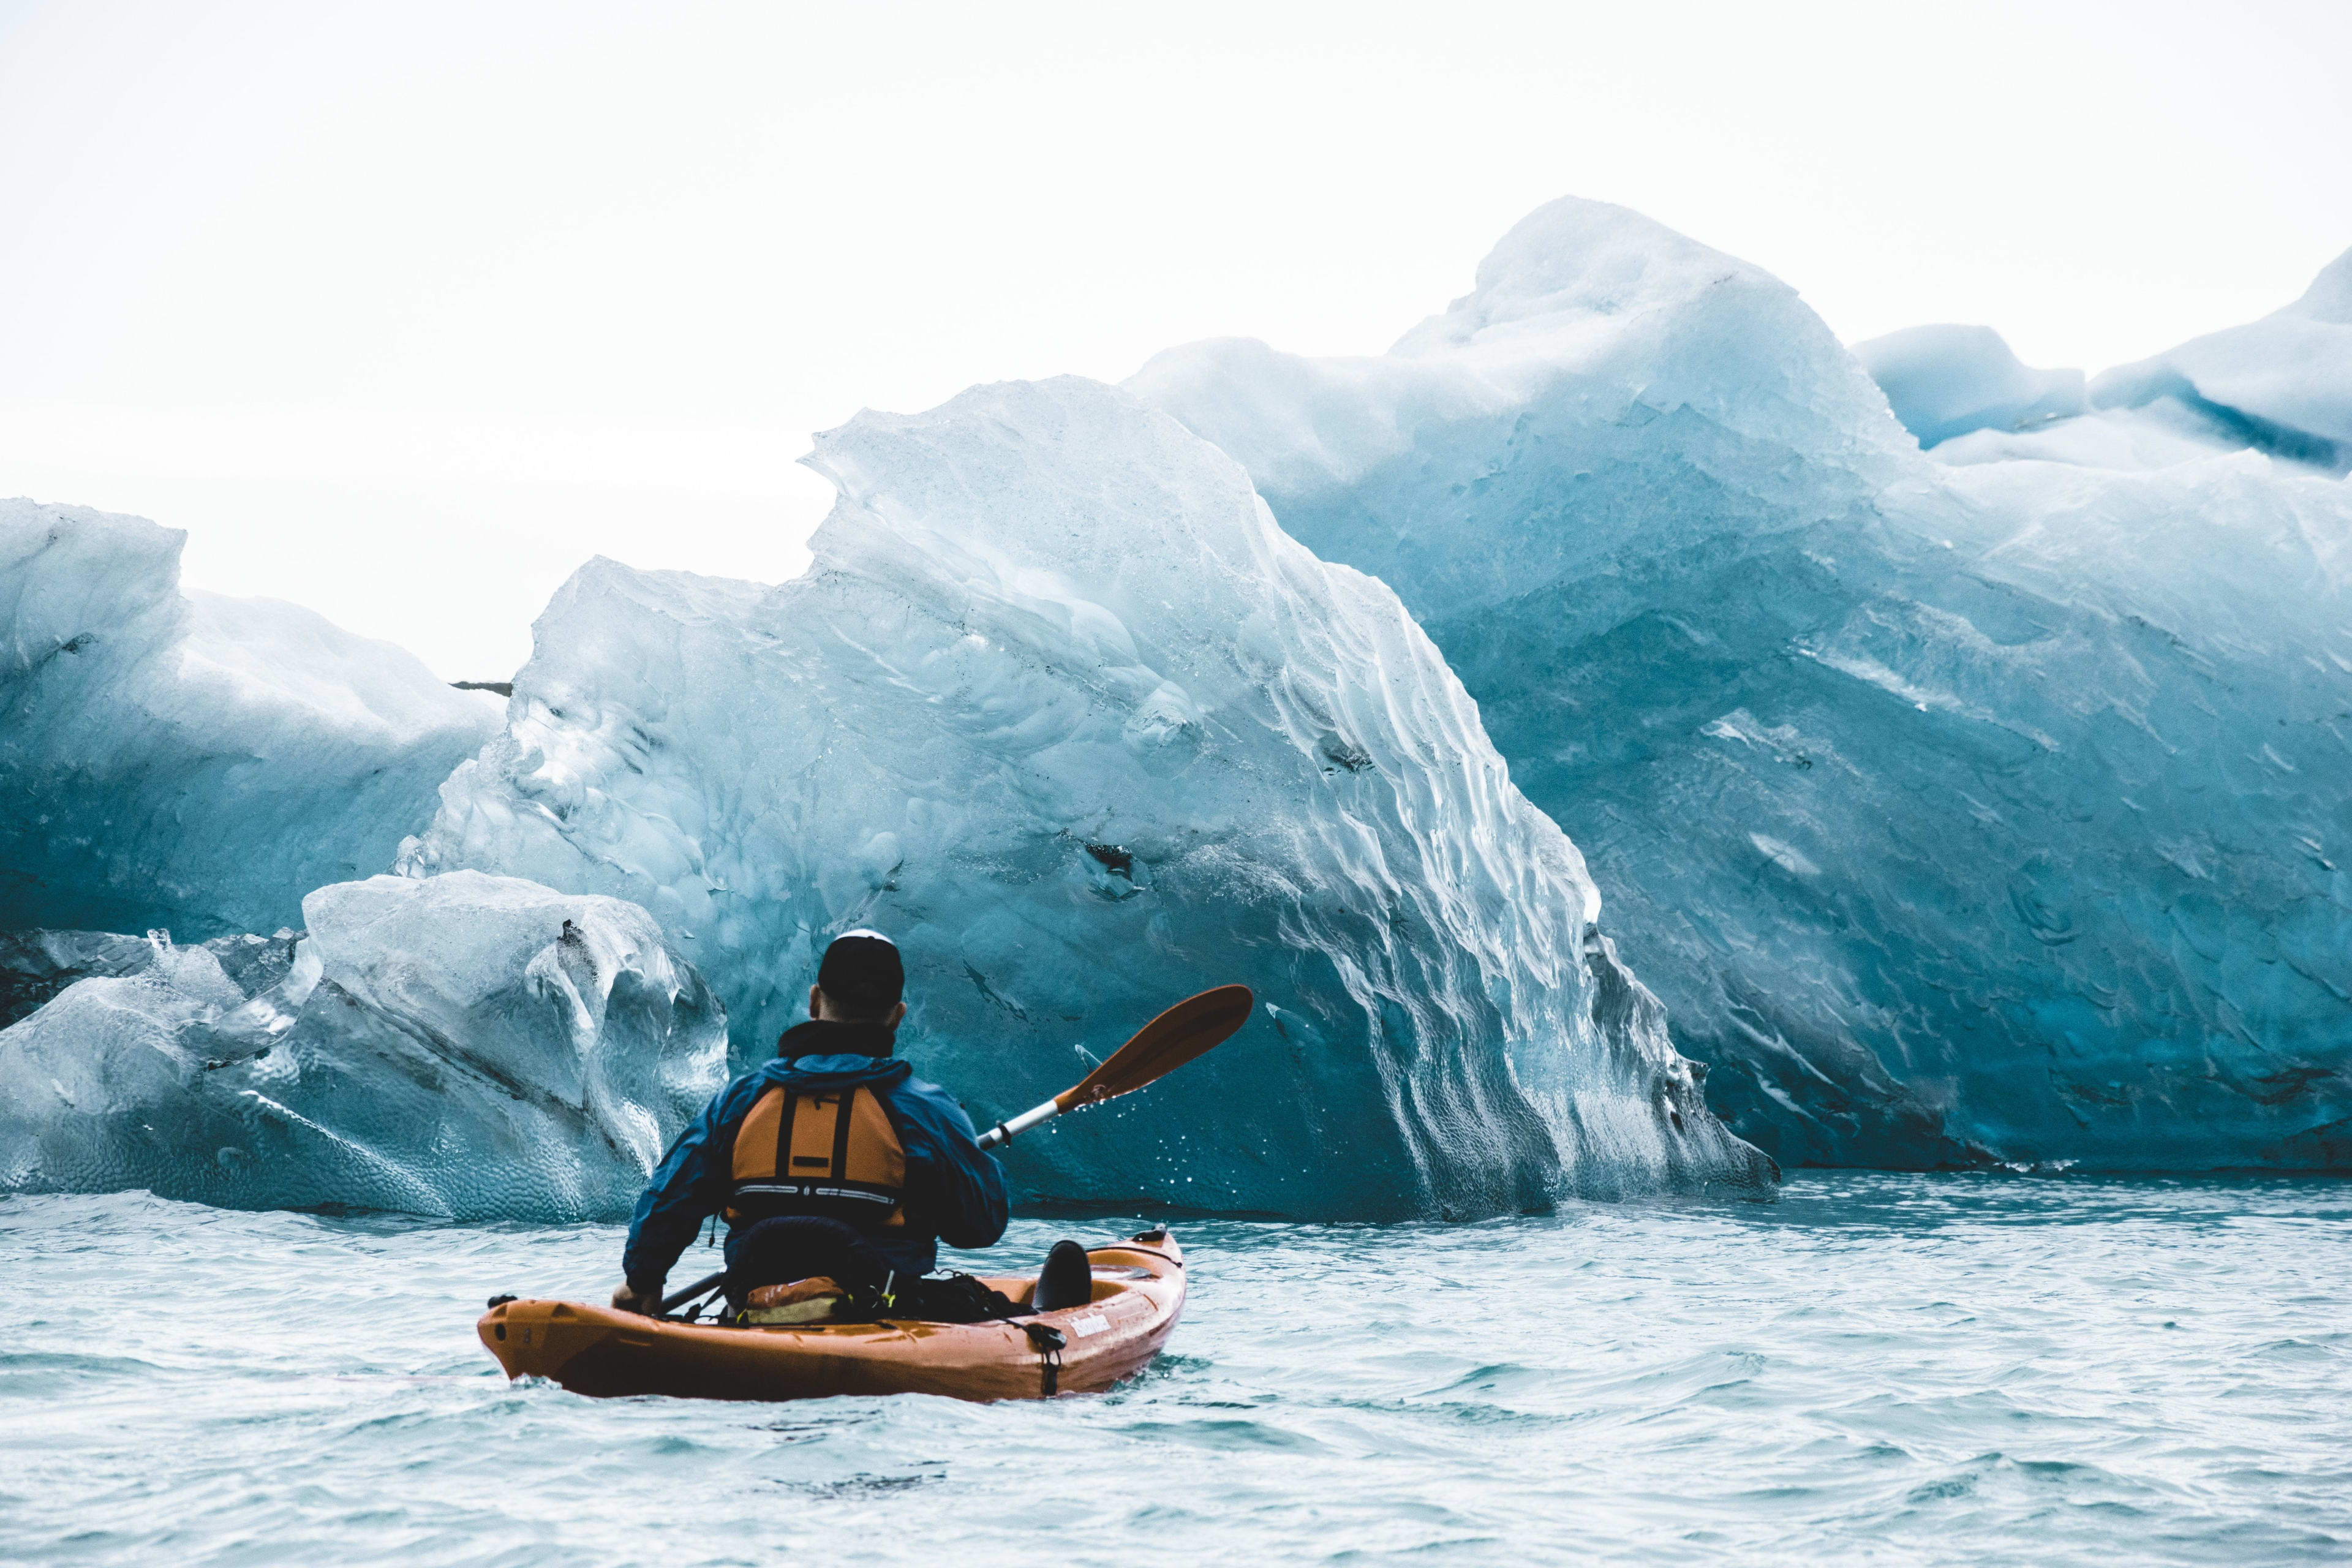 jokulsarlon kayaking towards ice